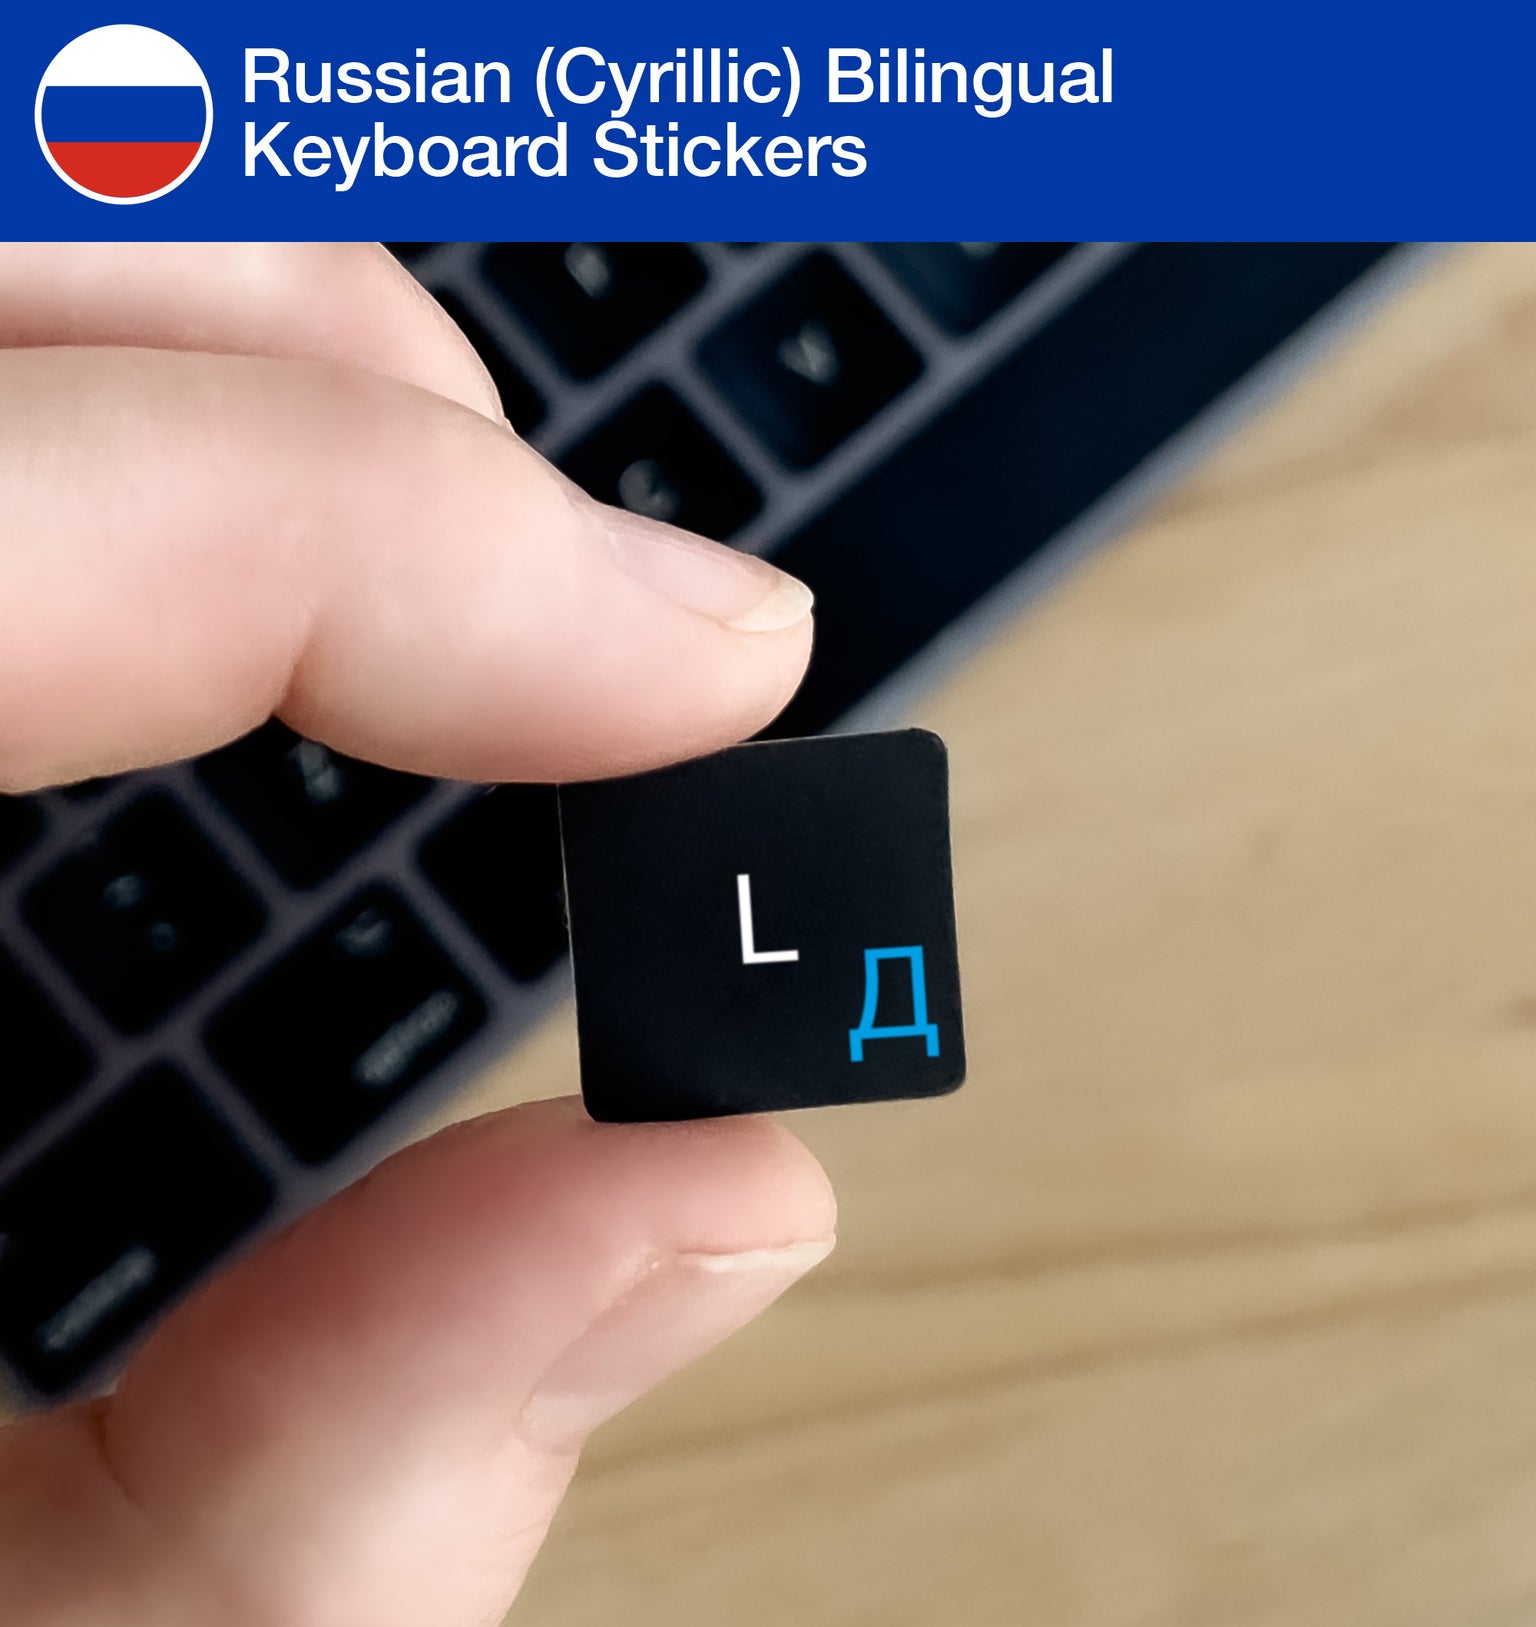 Russian (Cyrillic) Bilingual Keyboard Stickers with Russian layout